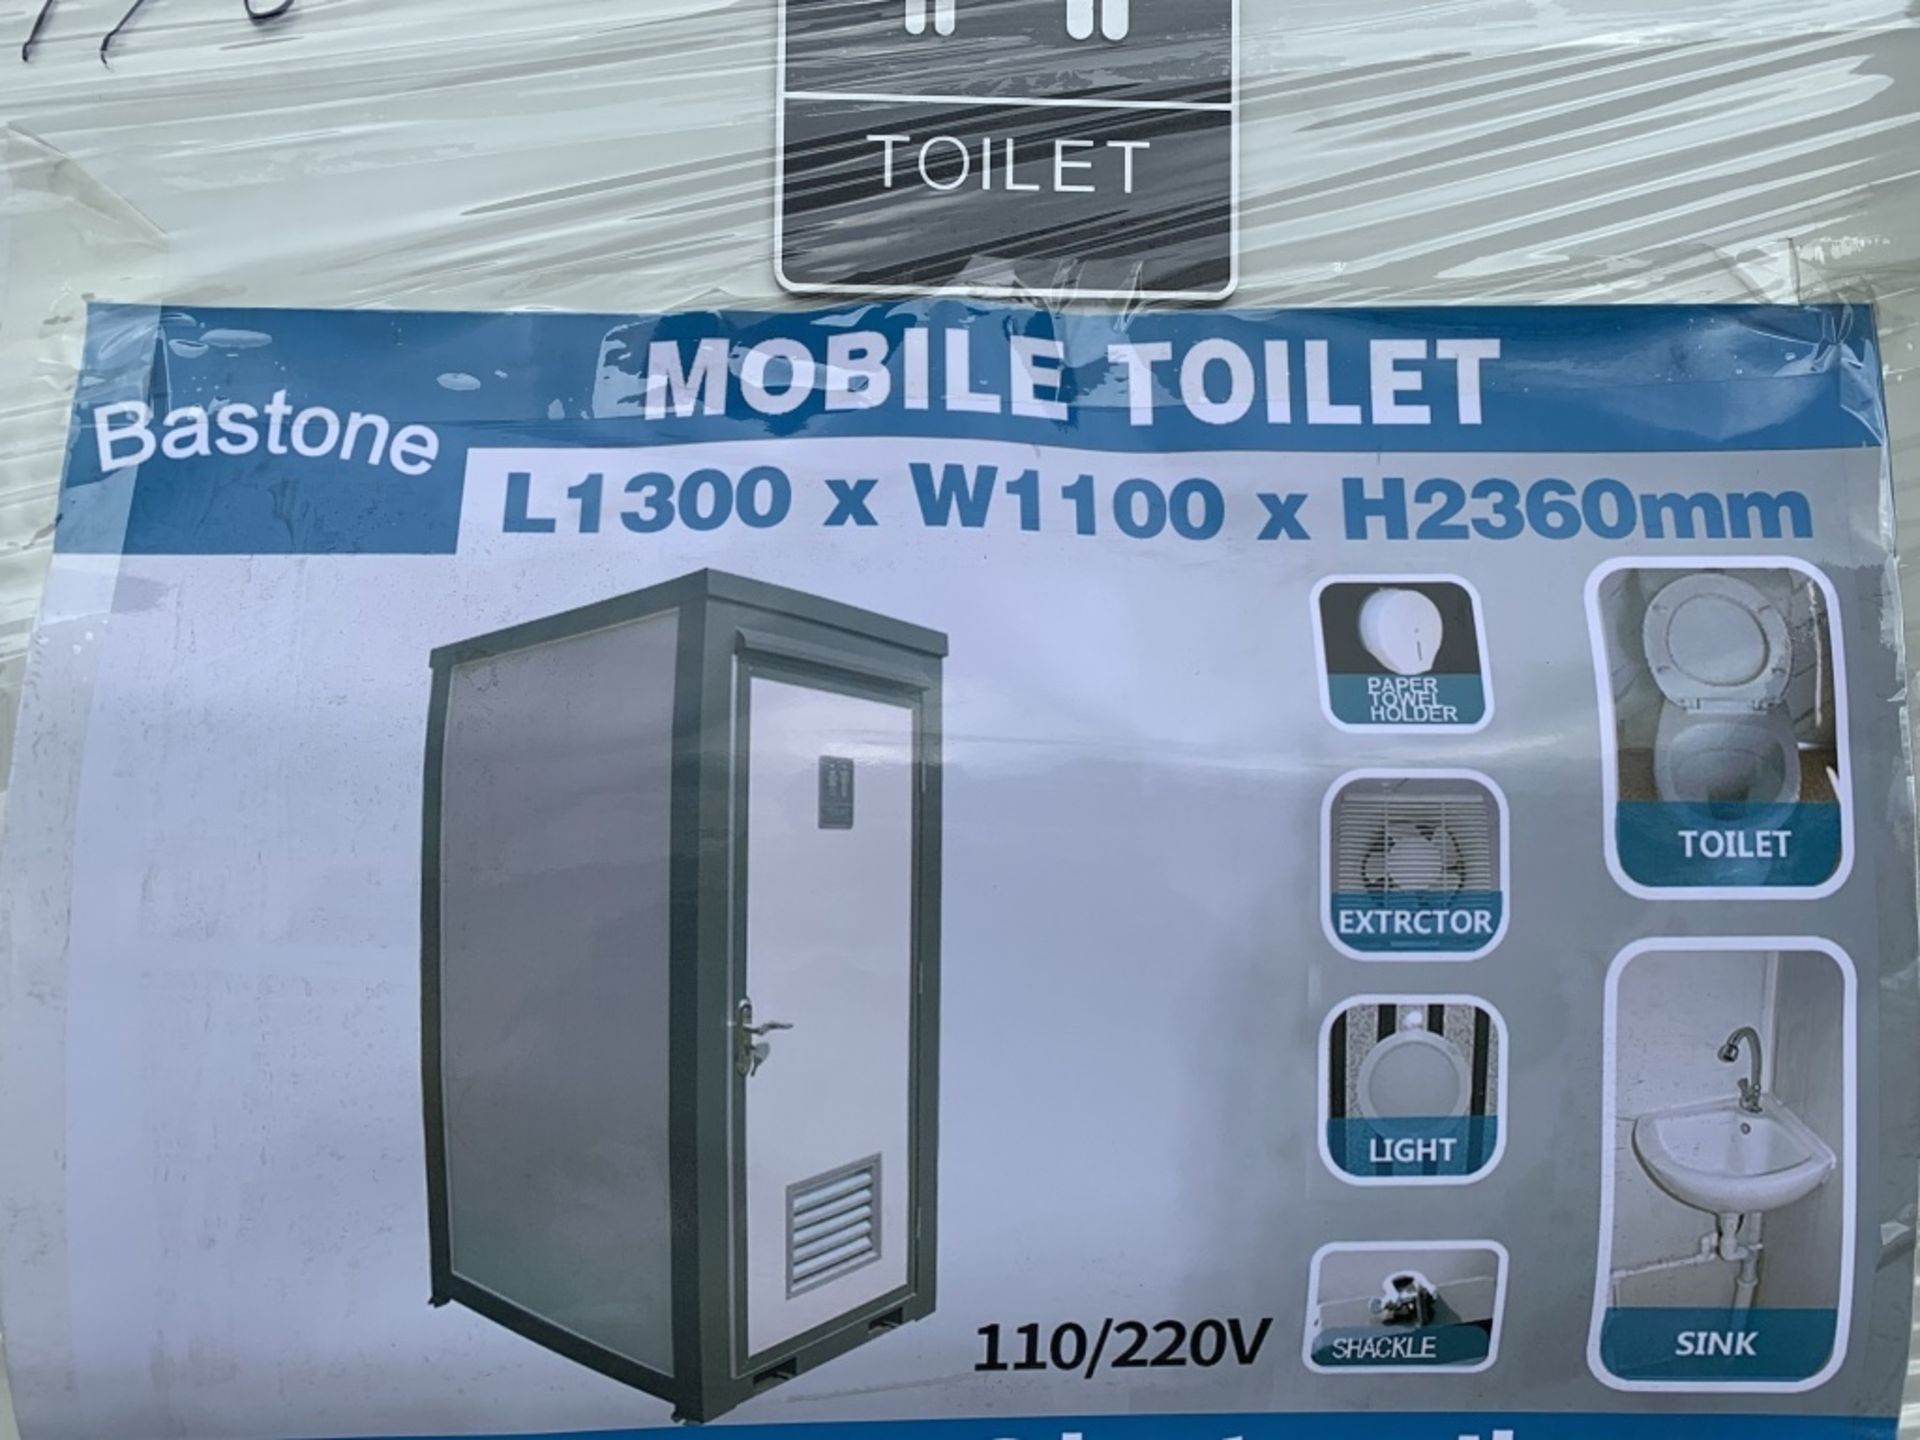 2020 Bastone portable Toilet - Image 5 of 5